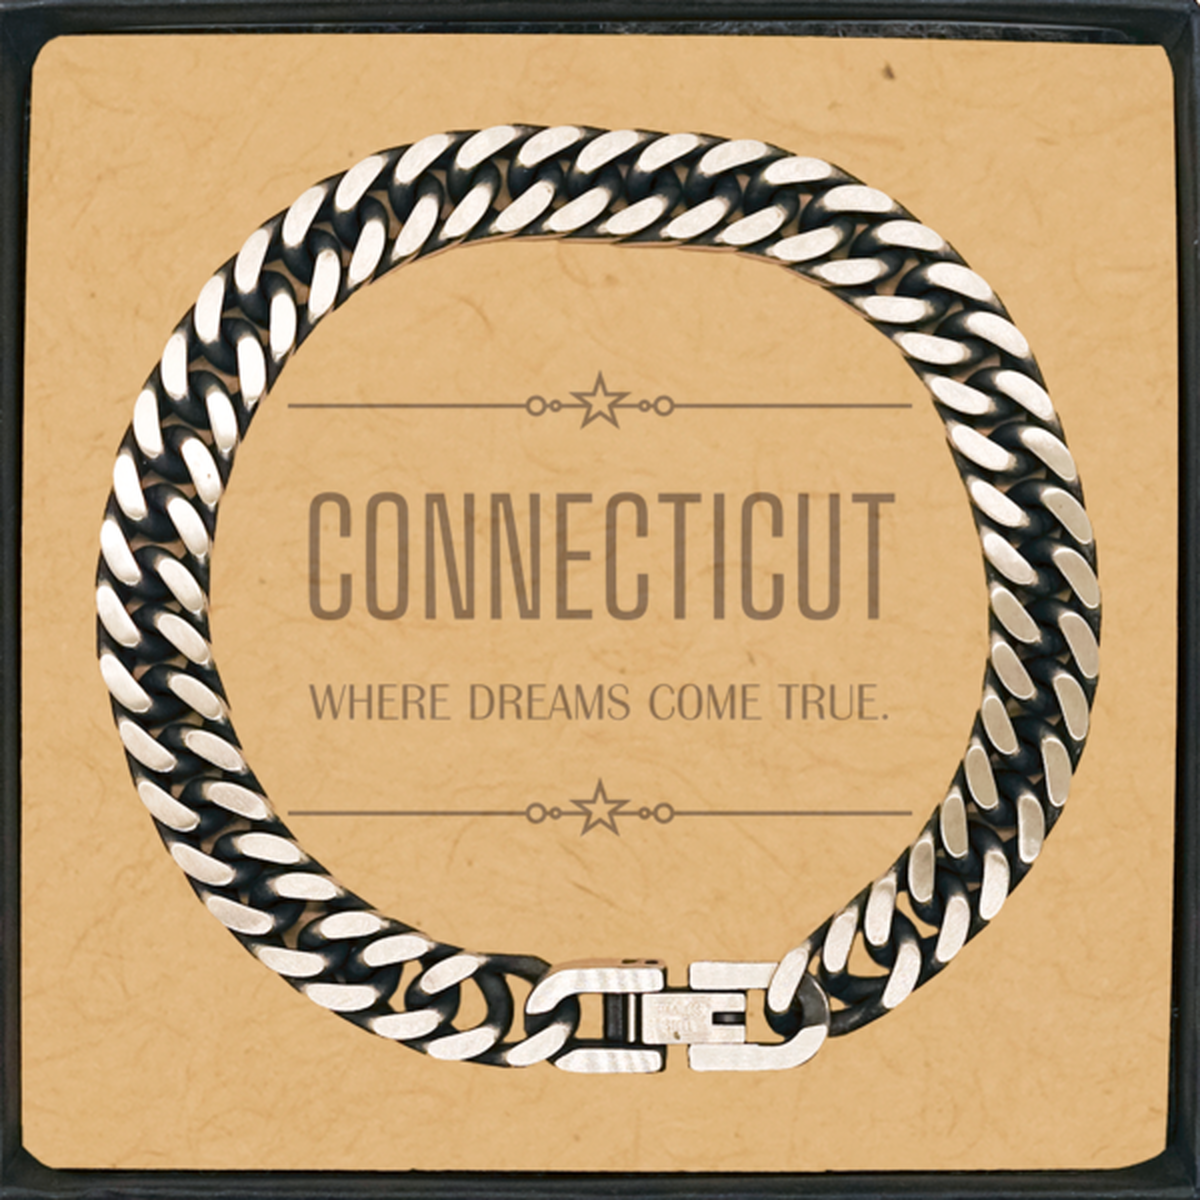 Love Connecticut State Cuban Link Chain Bracelet, Connecticut Where dreams come true, Birthday Inspirational Gifts For Connecticut Men, Women, Friends